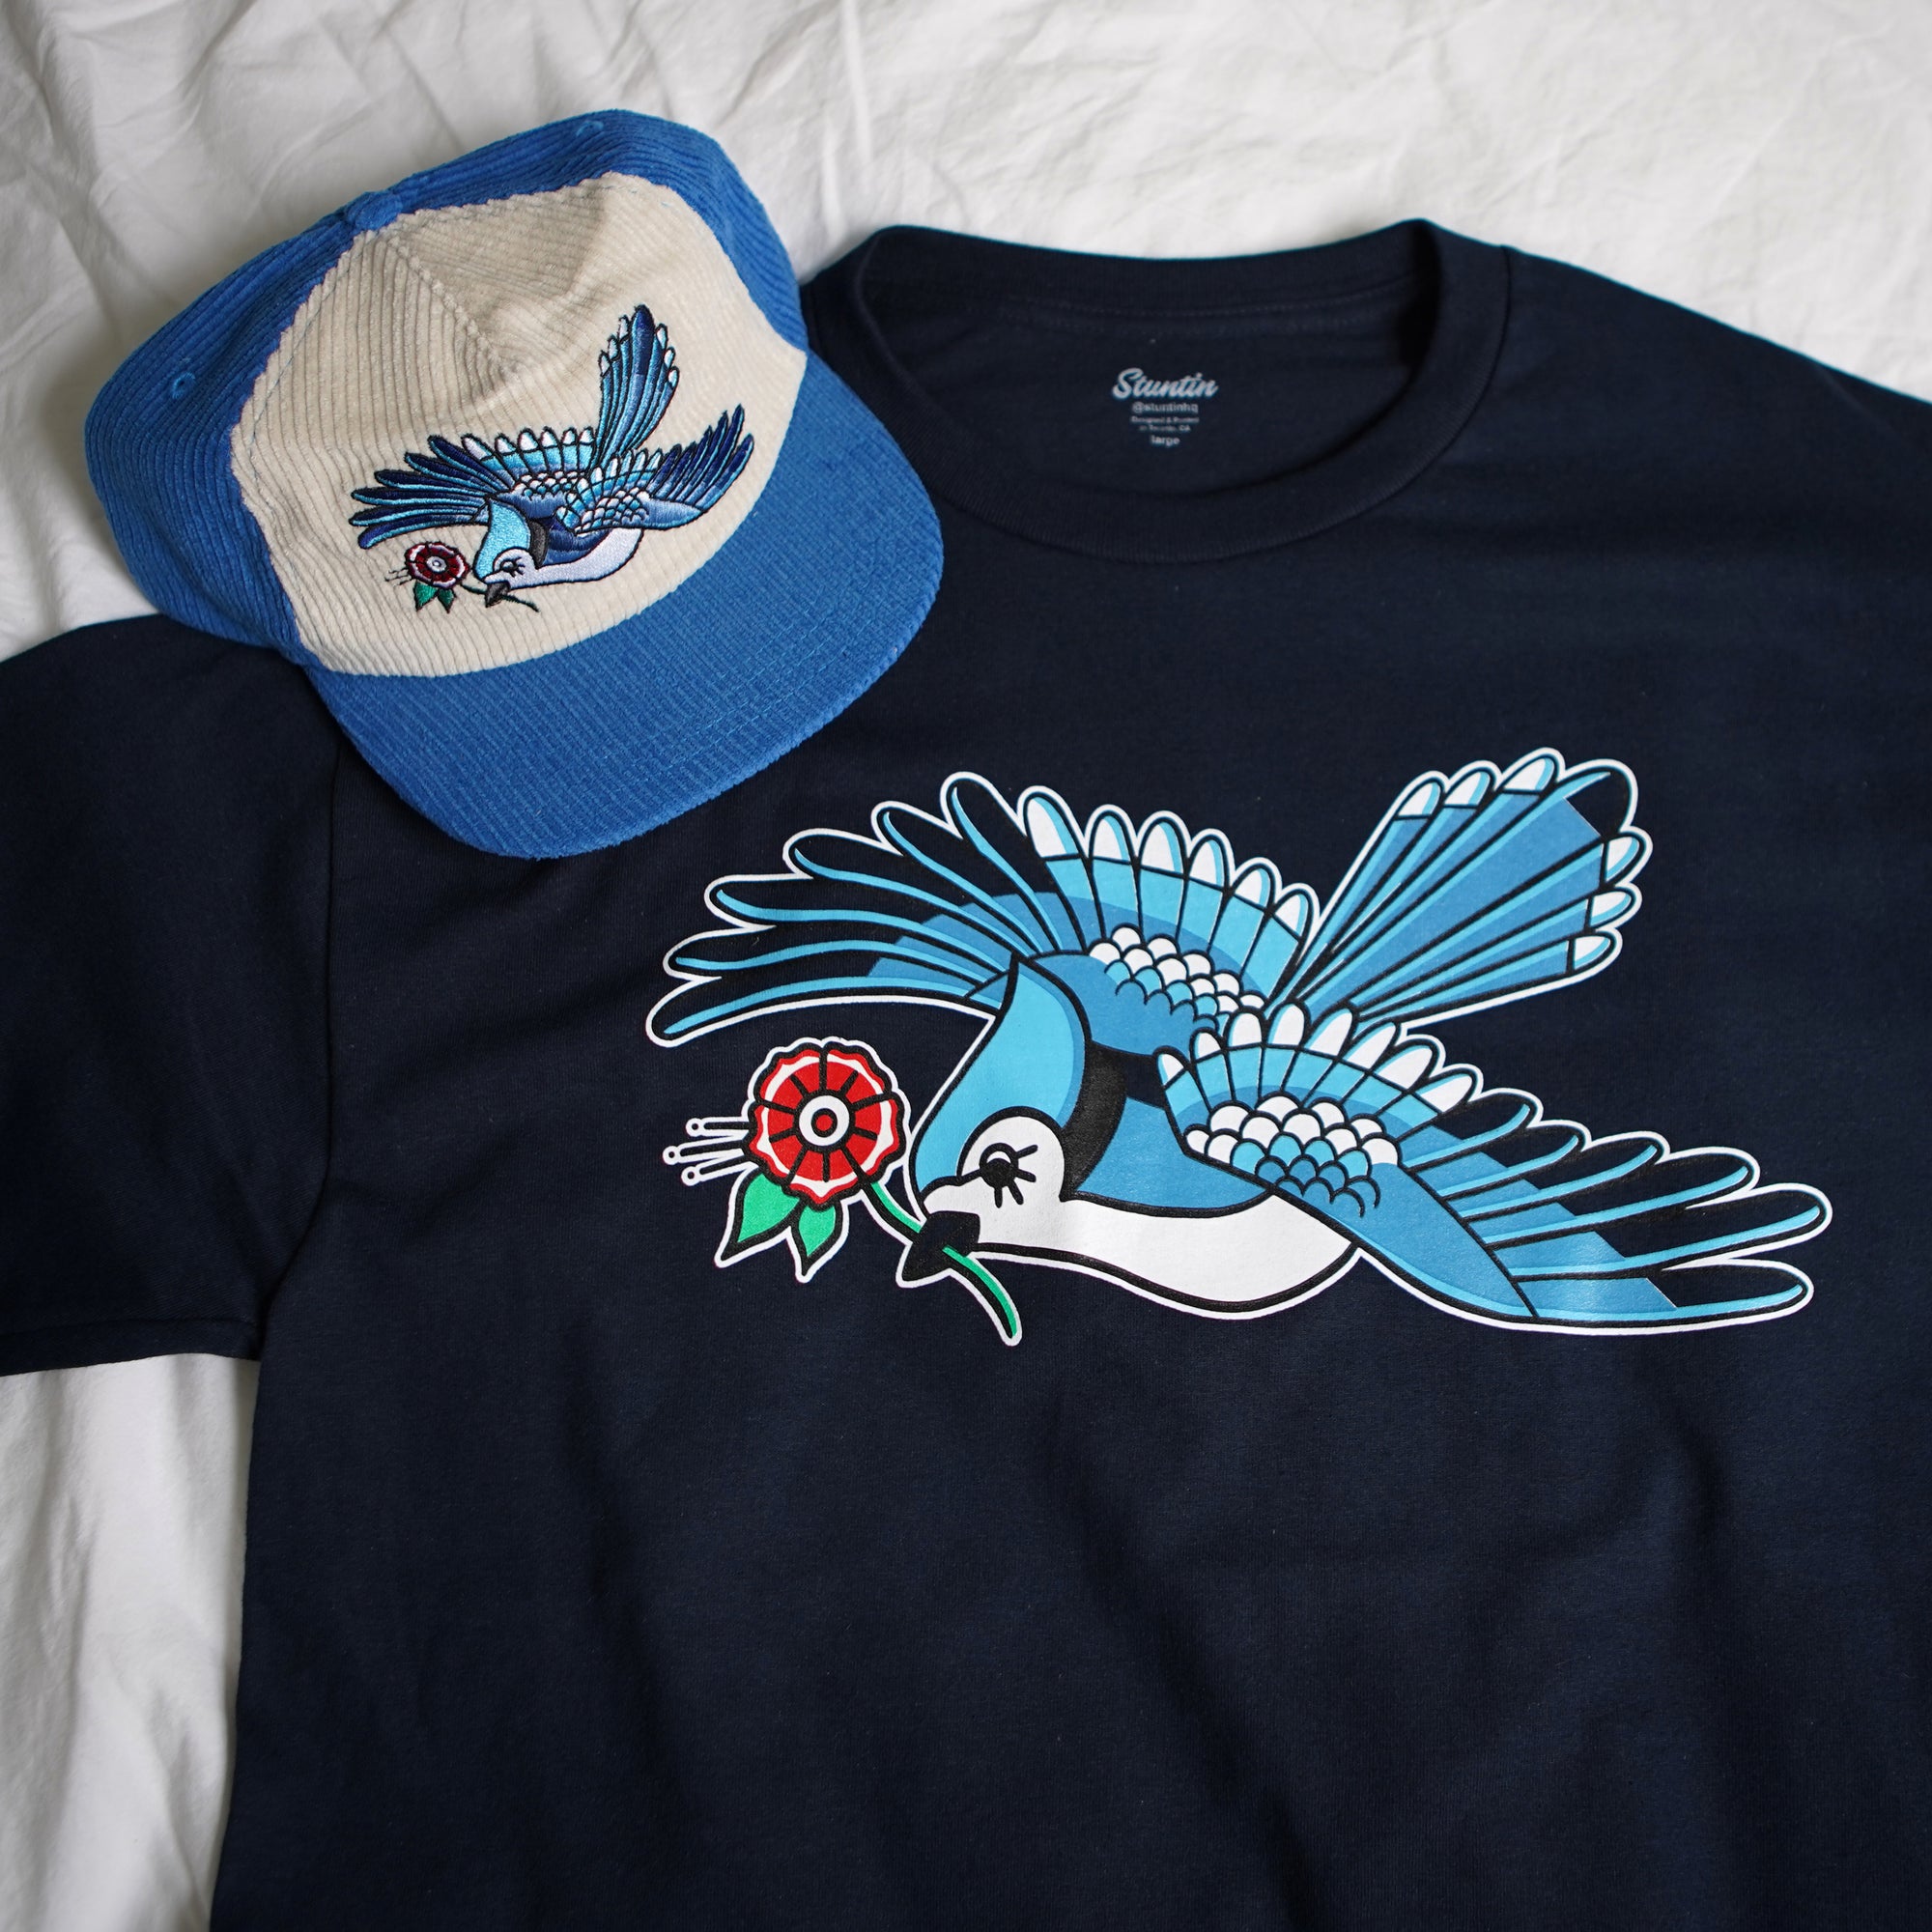 Blue Jays Toronto 45th Anniversary Shirt - Guineashirt Premium ™ LLC